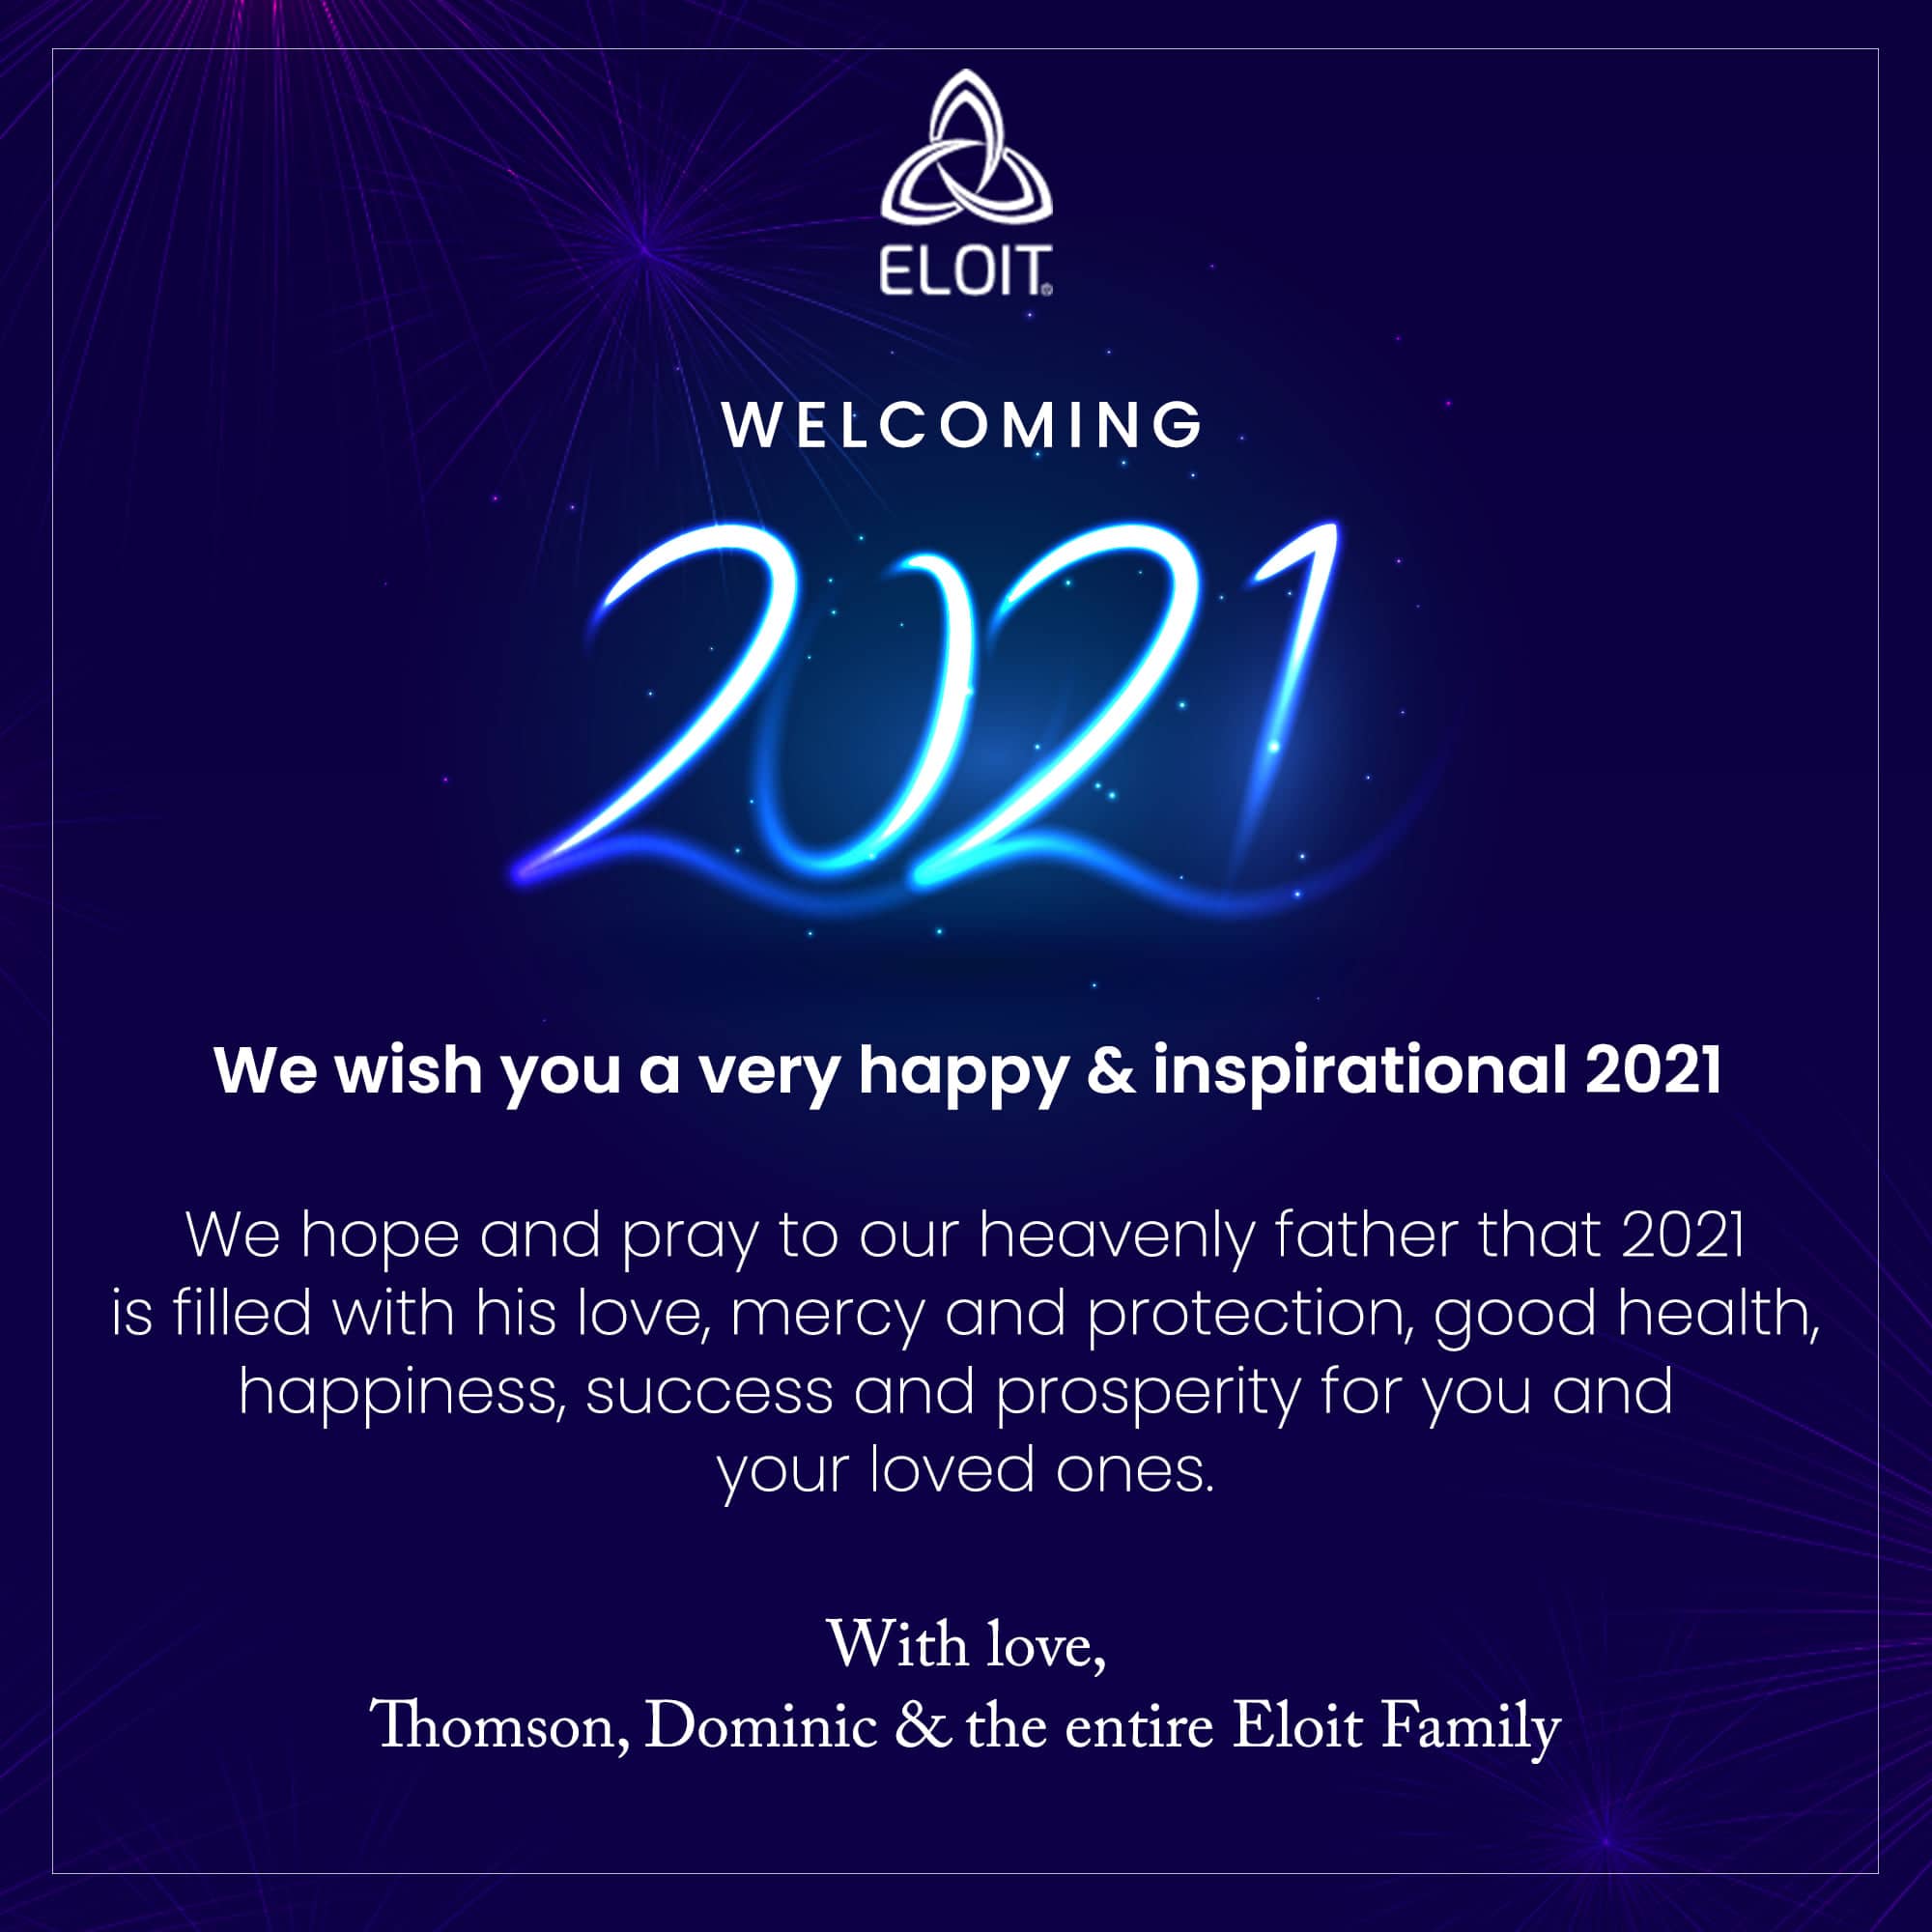 Team Eloit wish you a very happy & inspirational 2021